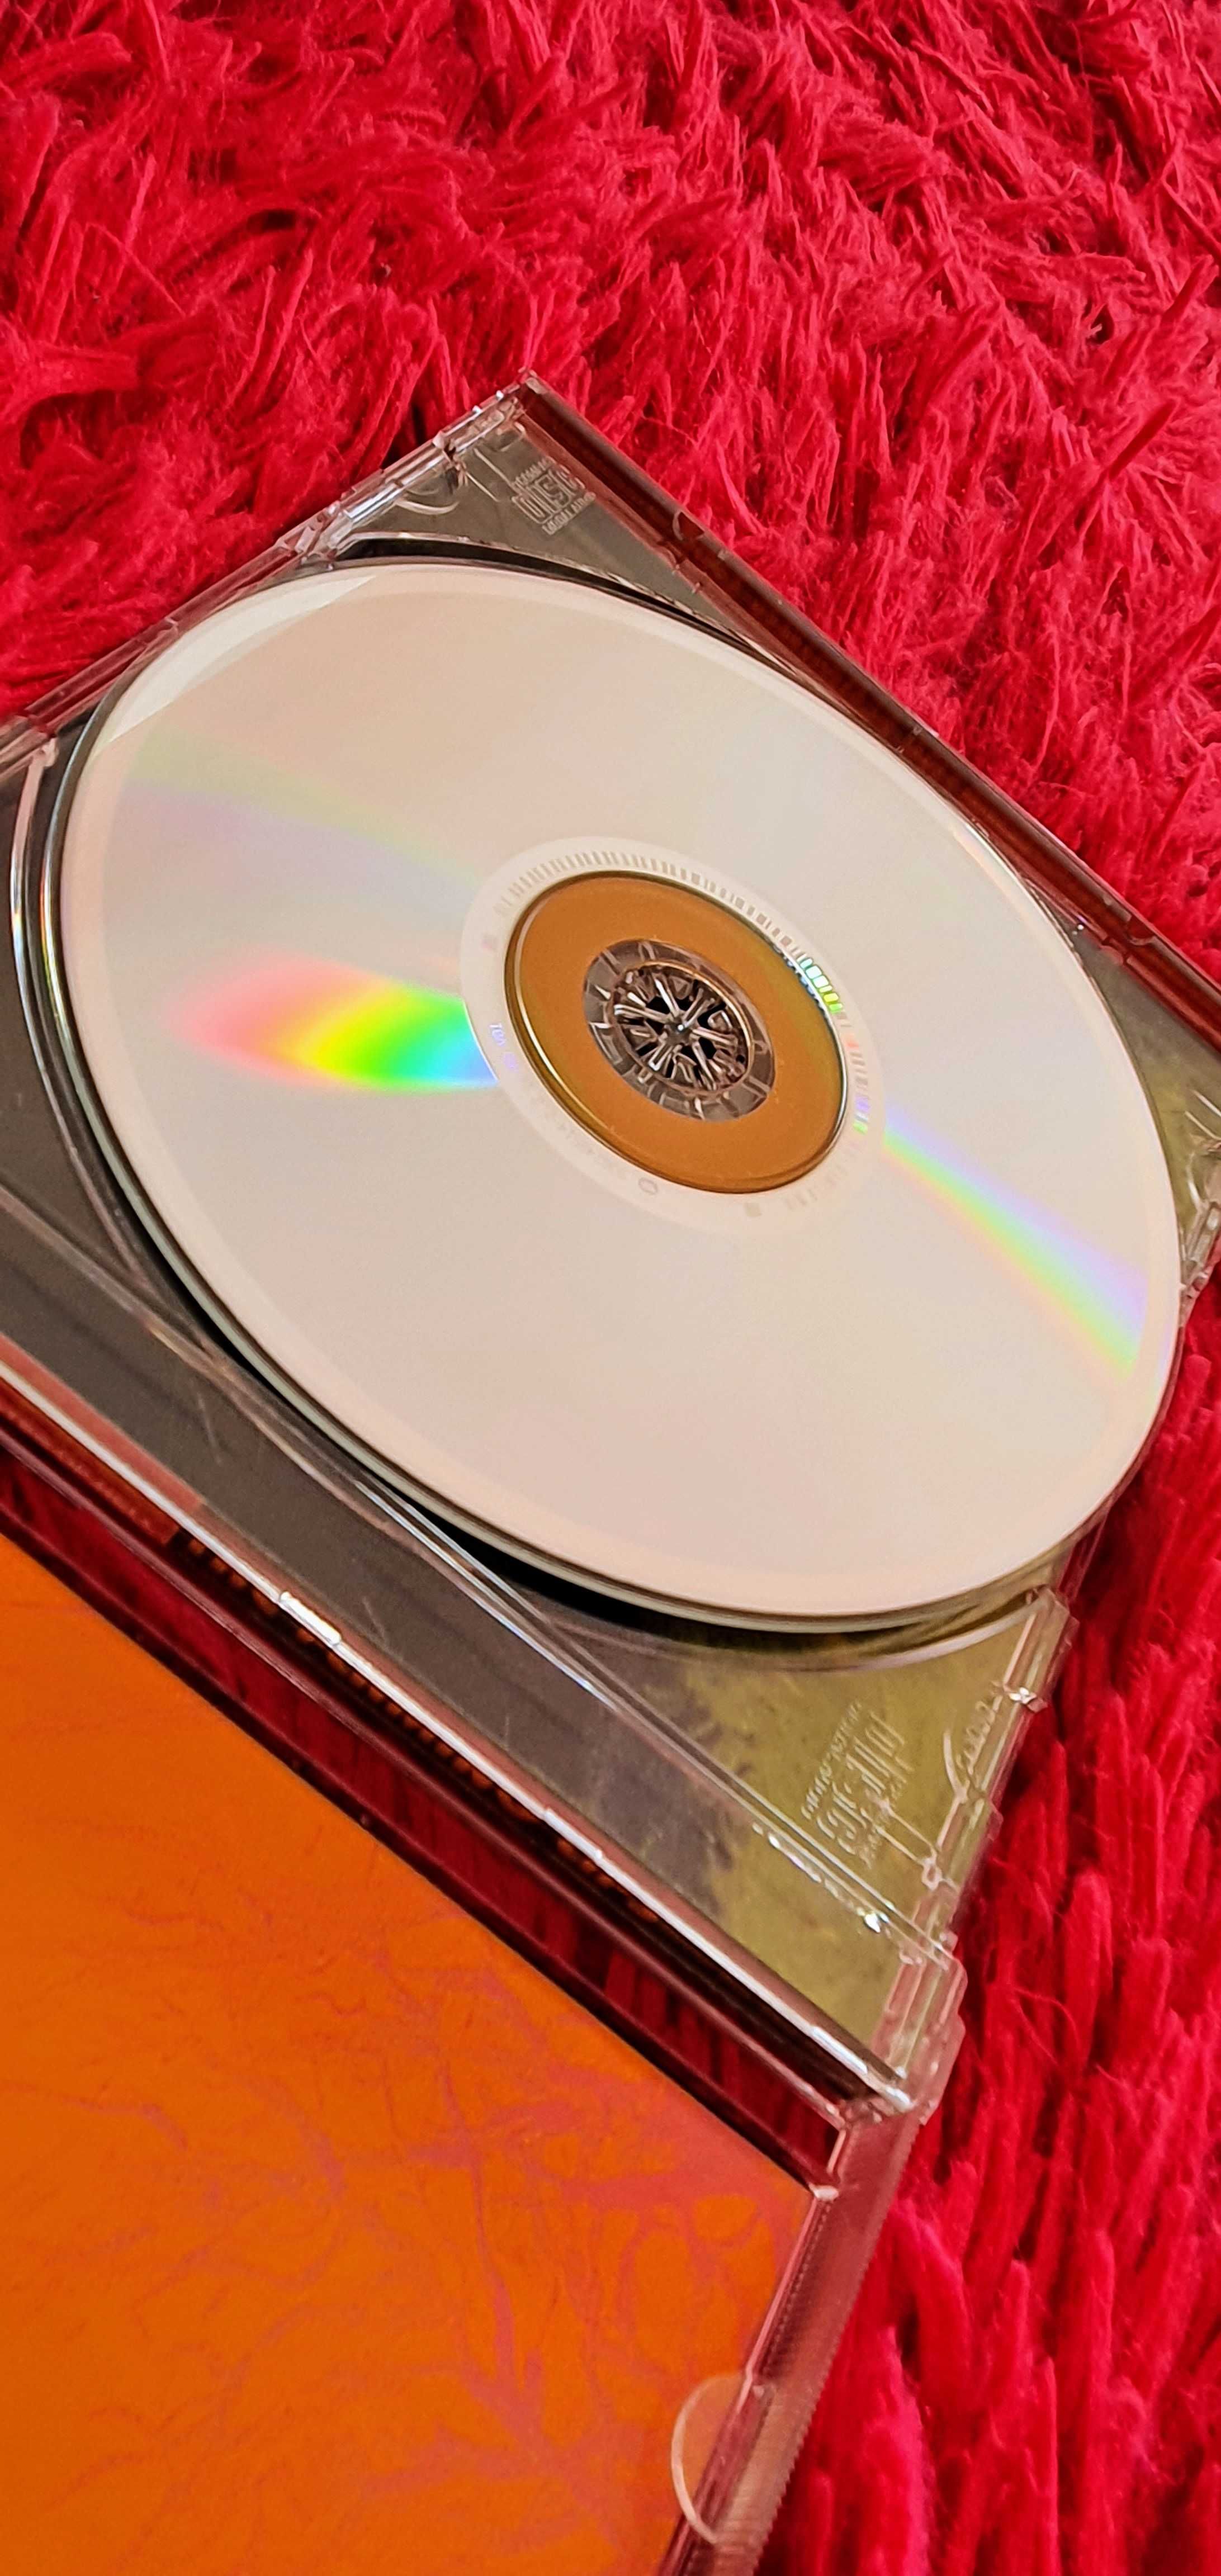 Zestaw The Flaming Lips 3 x CD jewel case